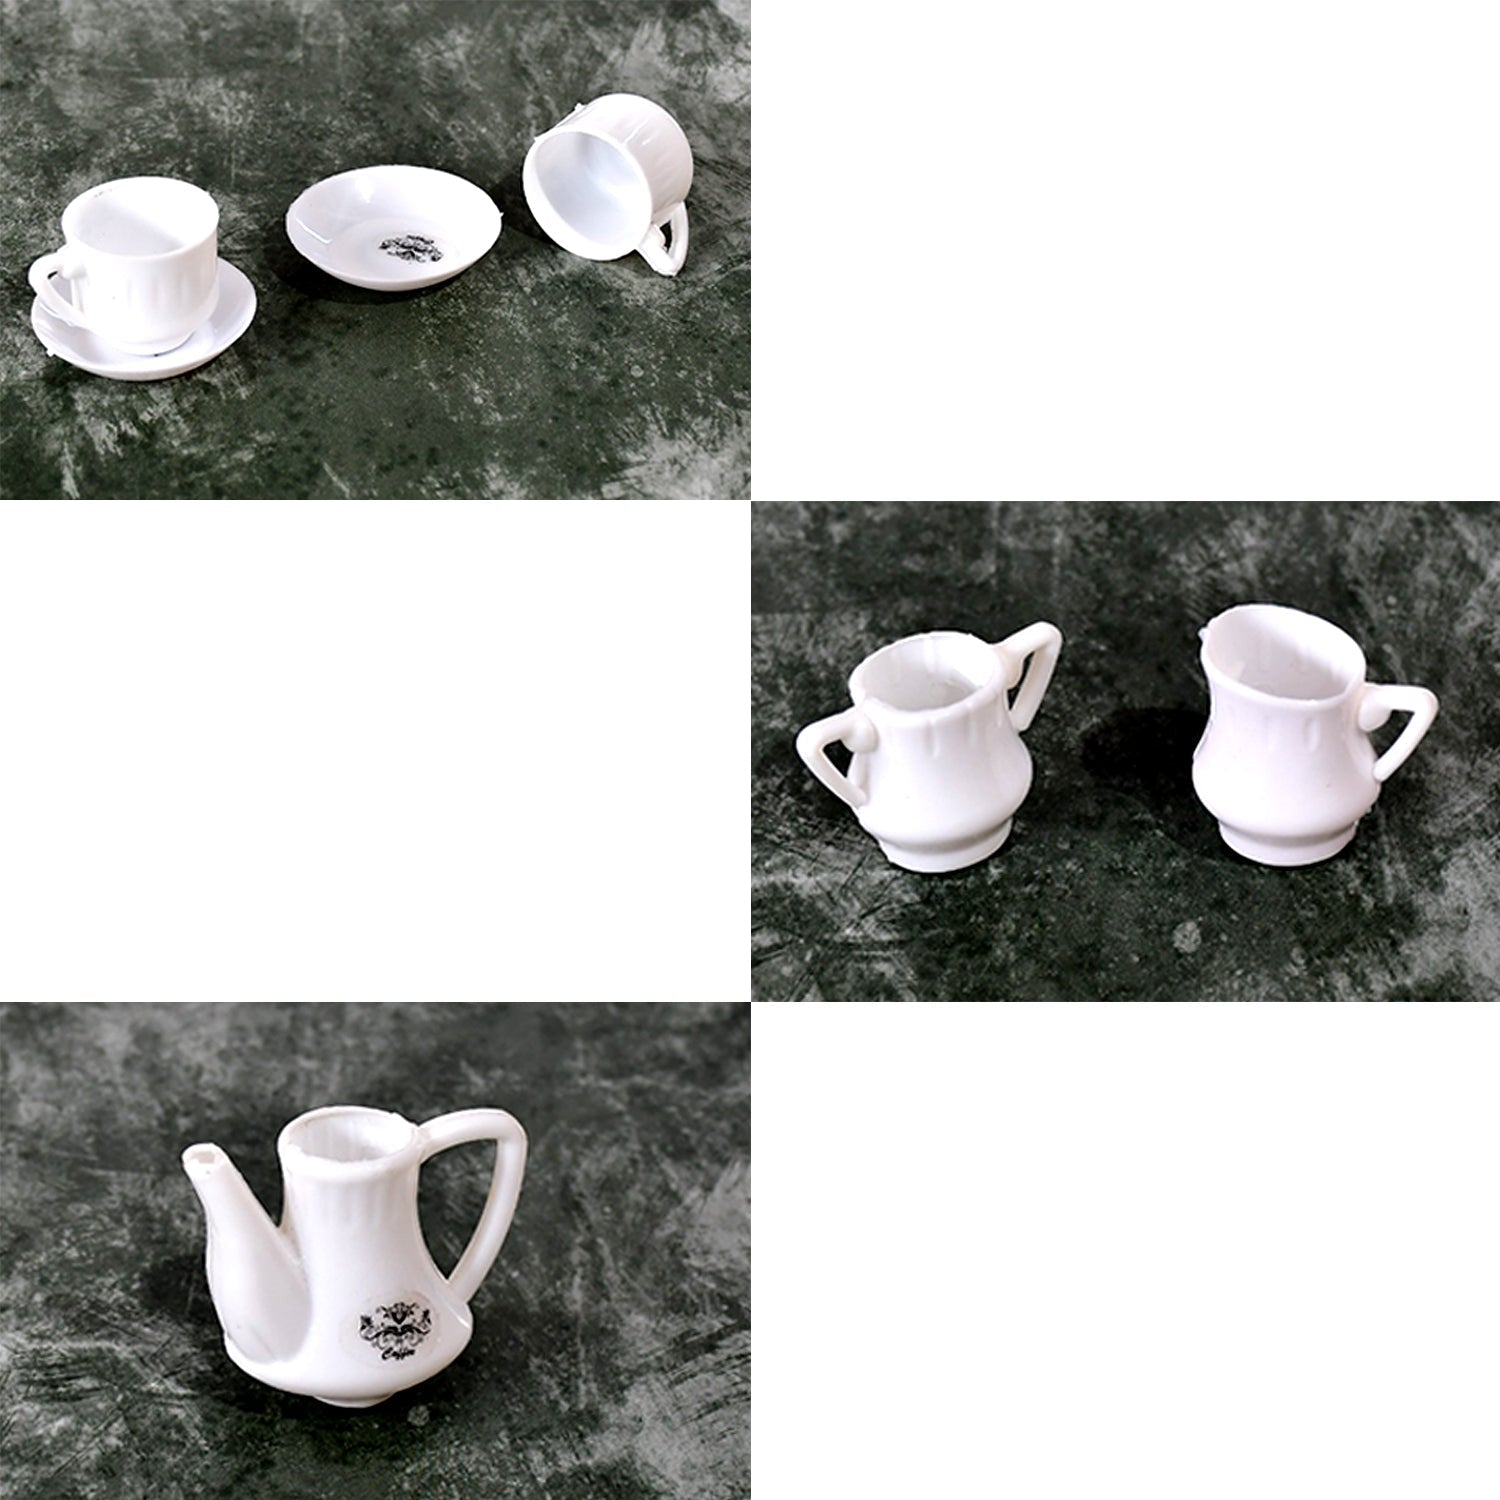 4445 ï»¿Tickles Tea toy Set | Coffee Kitchen Plastic Set Toy for Kids, Boys & Girls (15Pcs) DeoDap